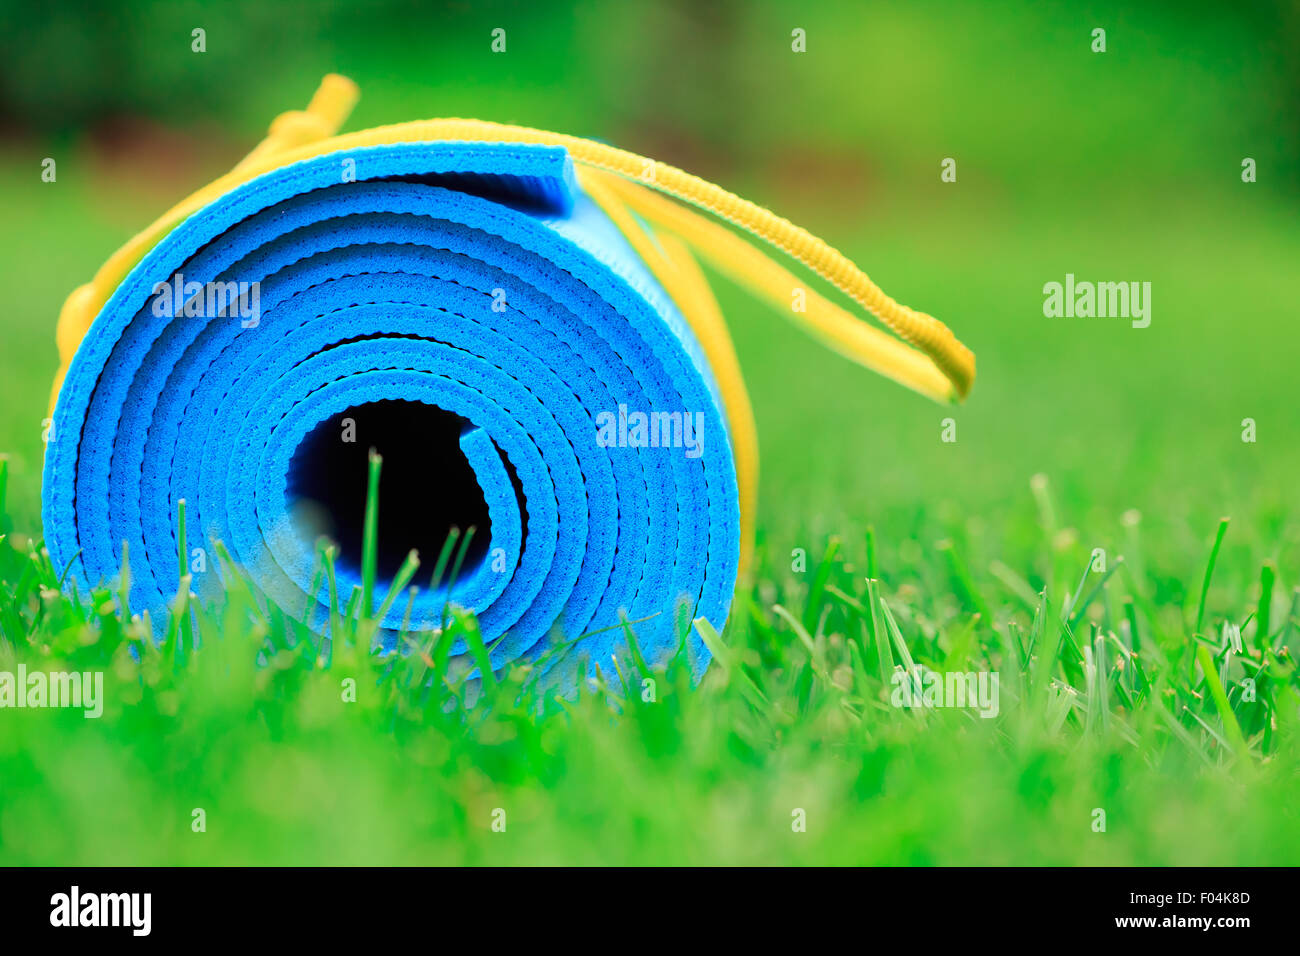 Blaue Yogamatte auf dem grünen Rasen, Nahaufnahme Foto, Fitness-Konzept Stockfoto